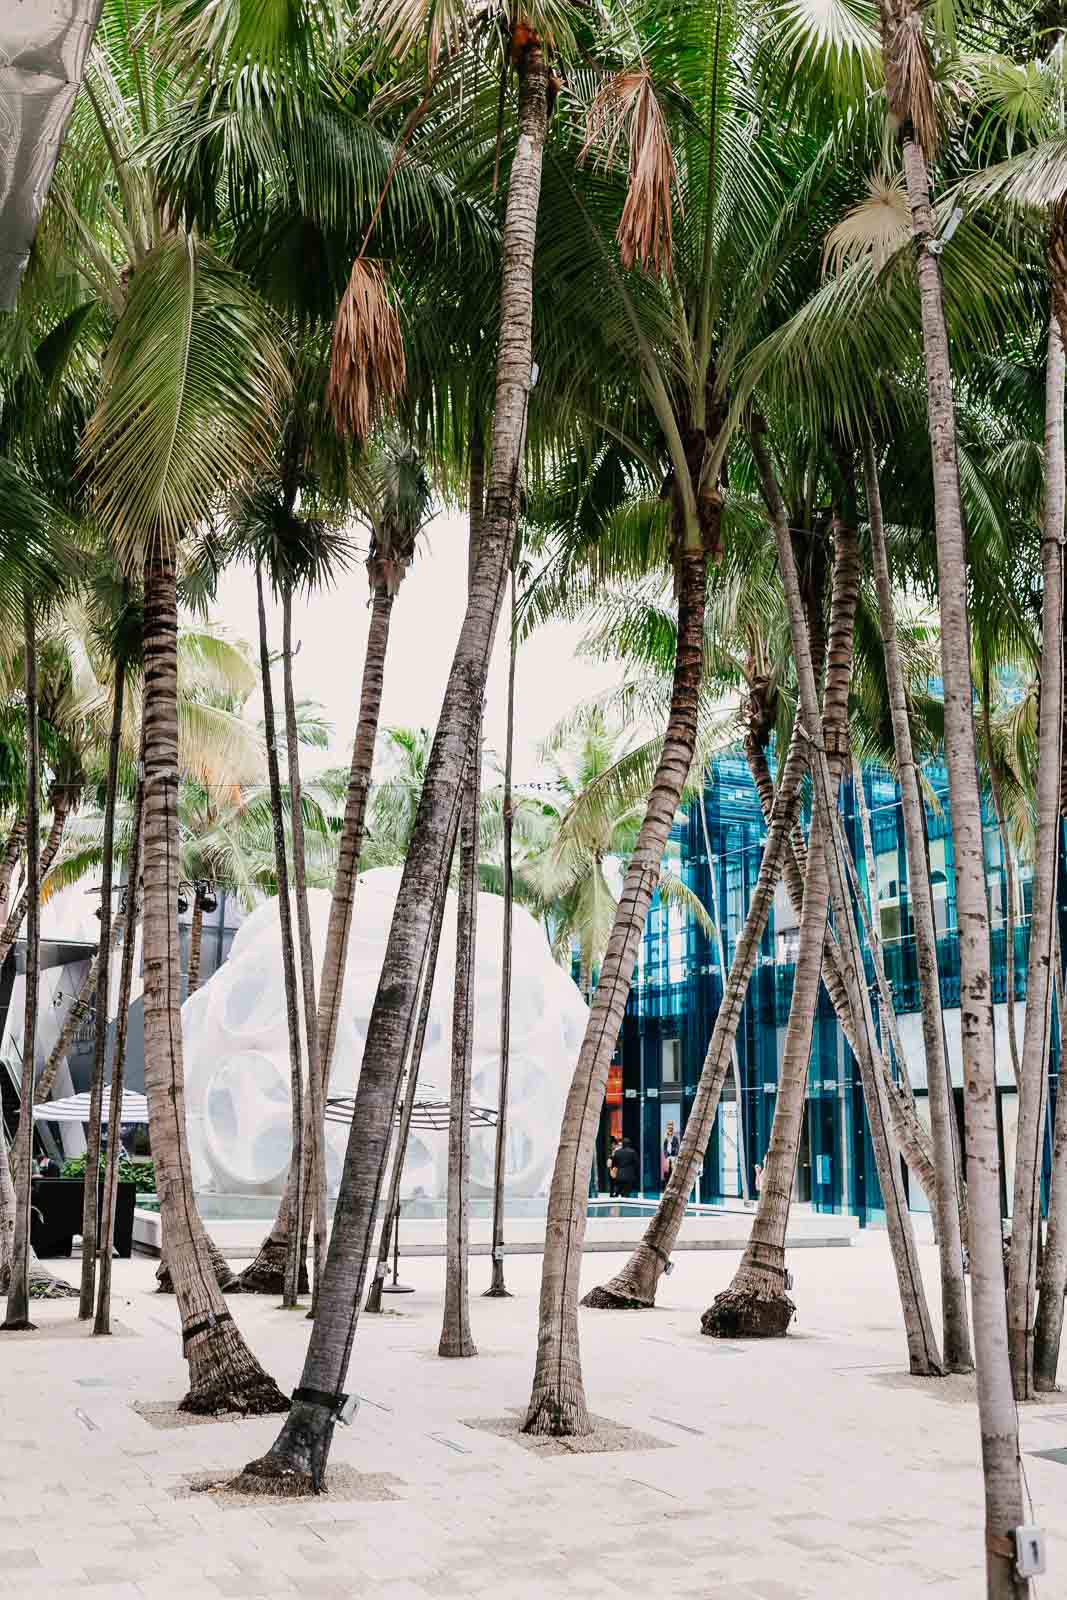 Design District Miami Photoshoot - Local Lens